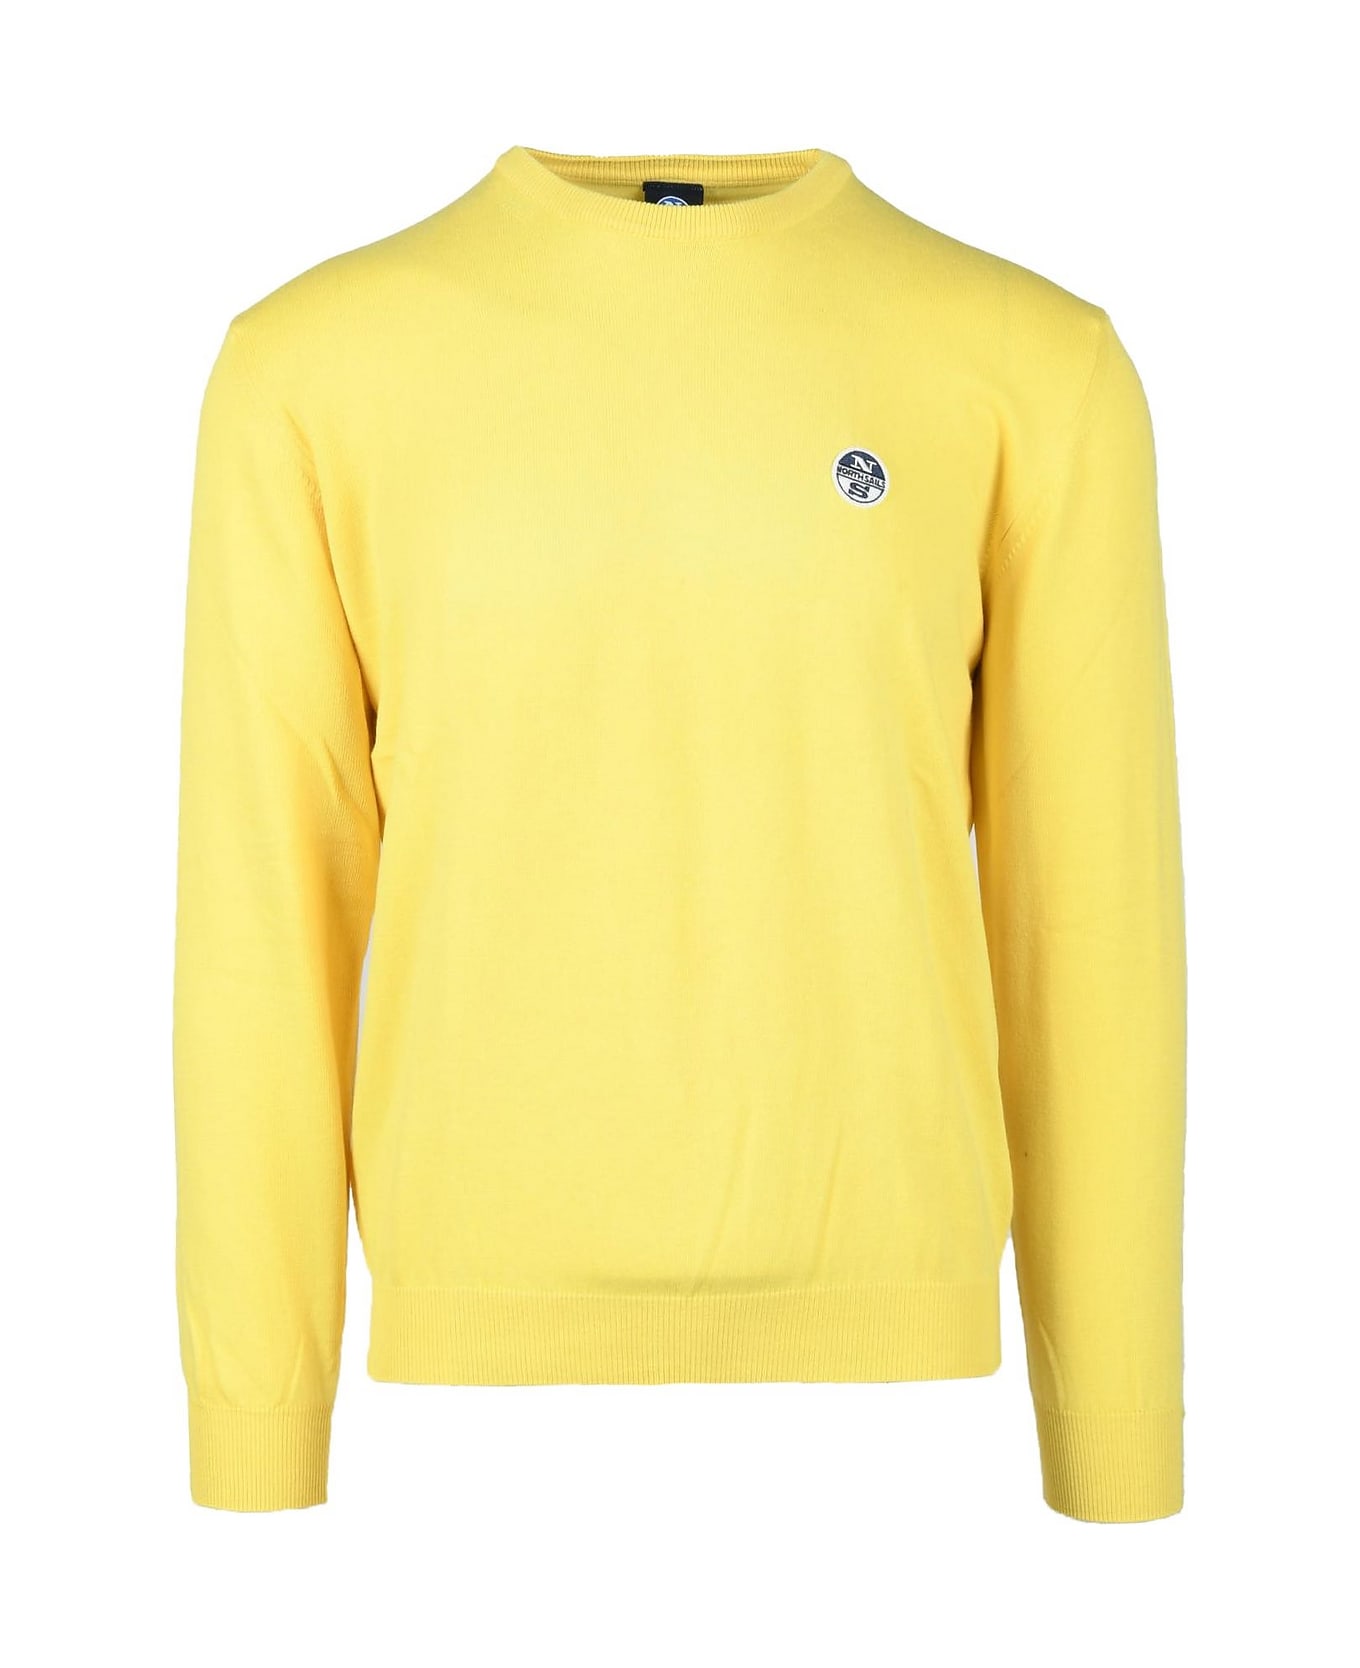 North Sails Men's Yellow Sweater - Yellow